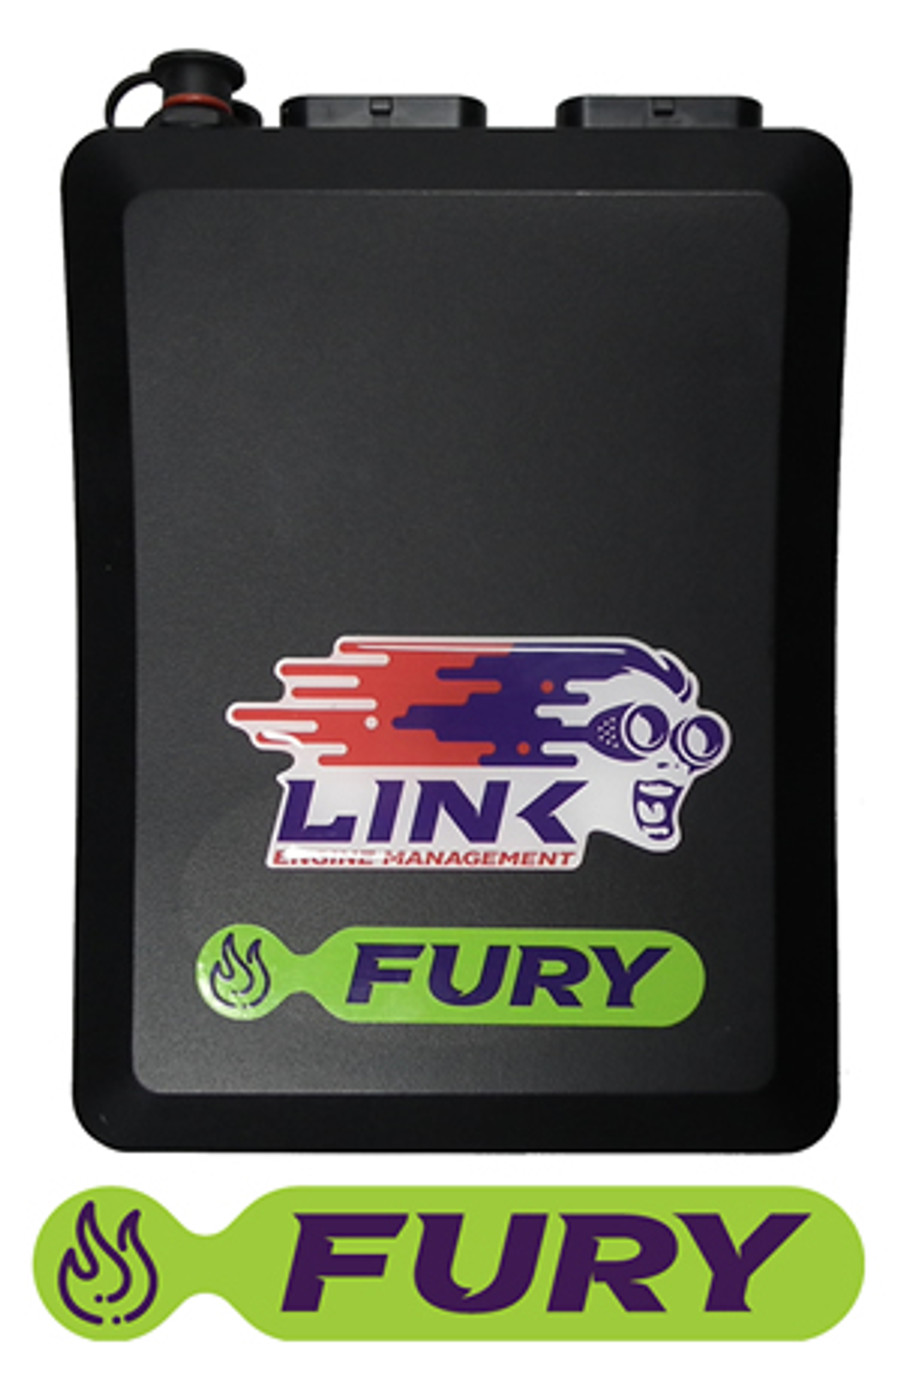 Link G4+ Fury ECU